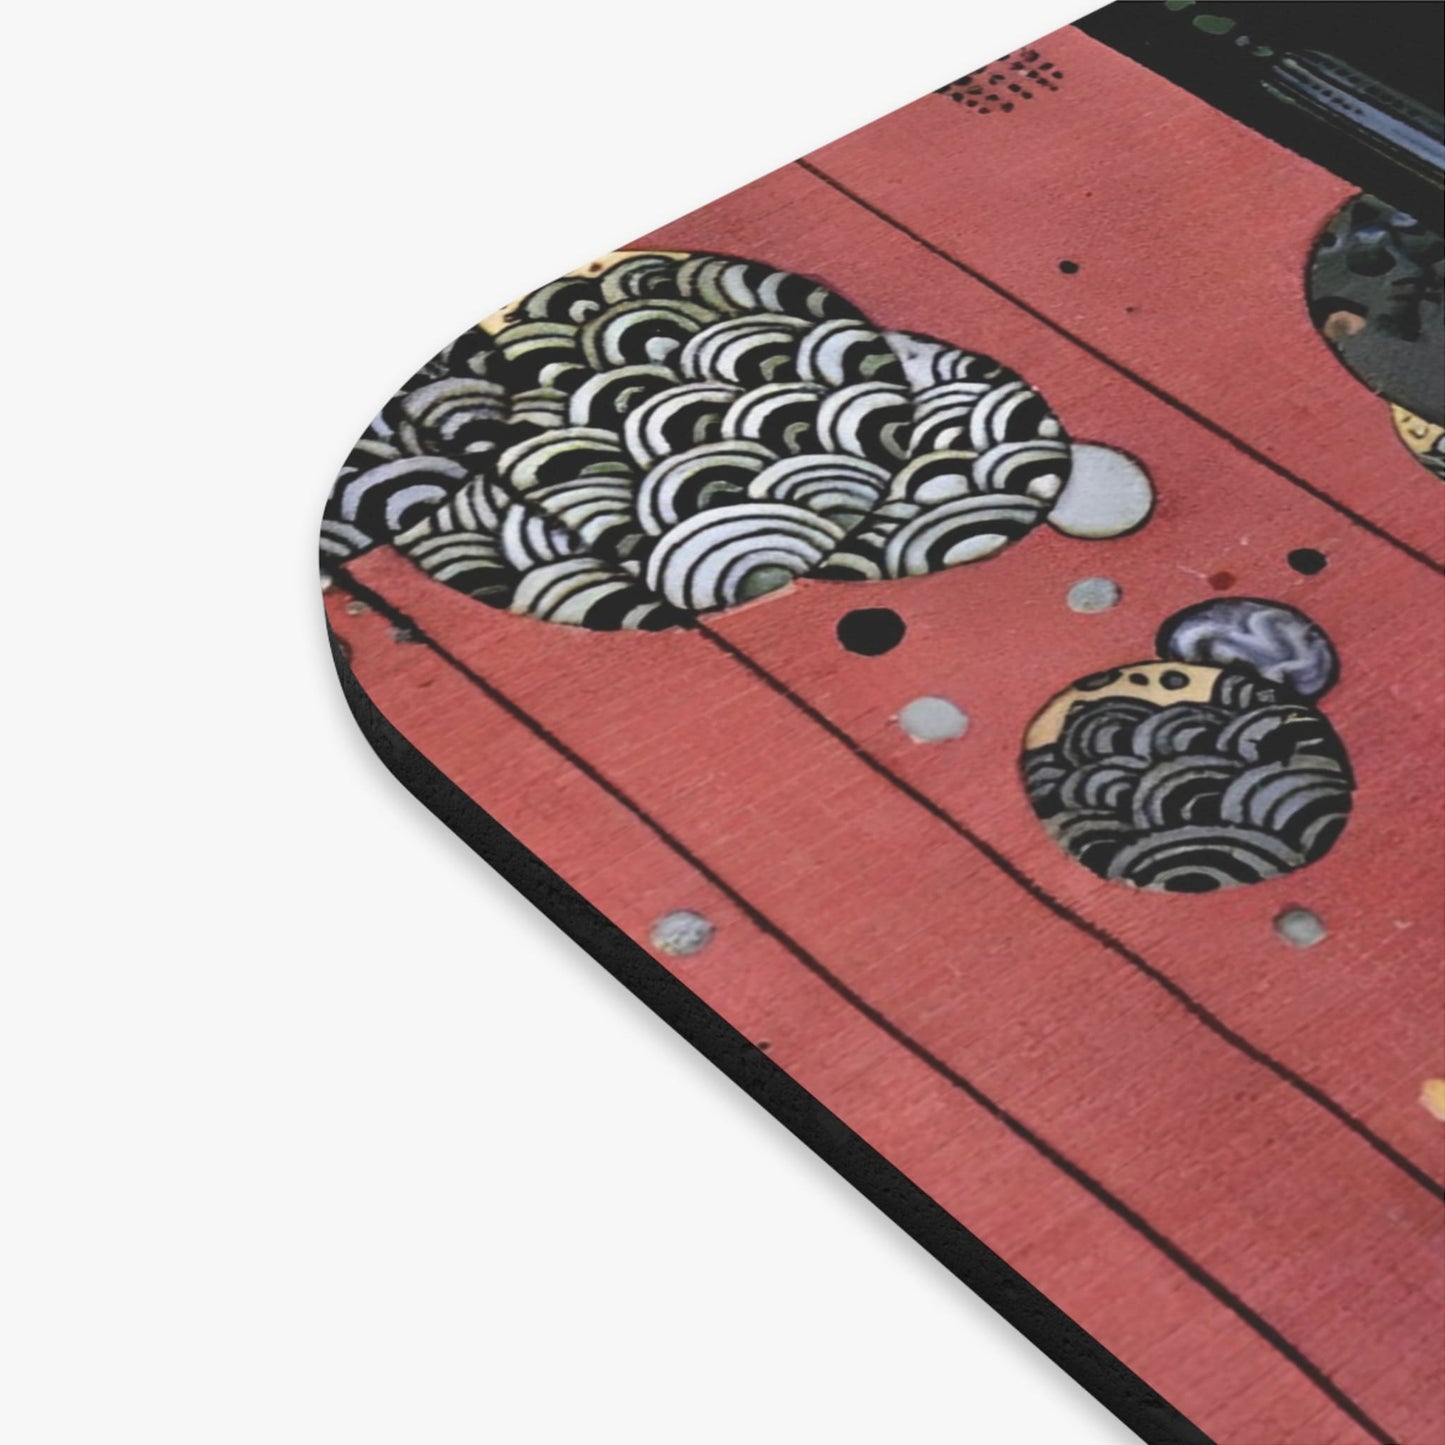 Fairytale Book Vintage Mouse Pad Design Close Up